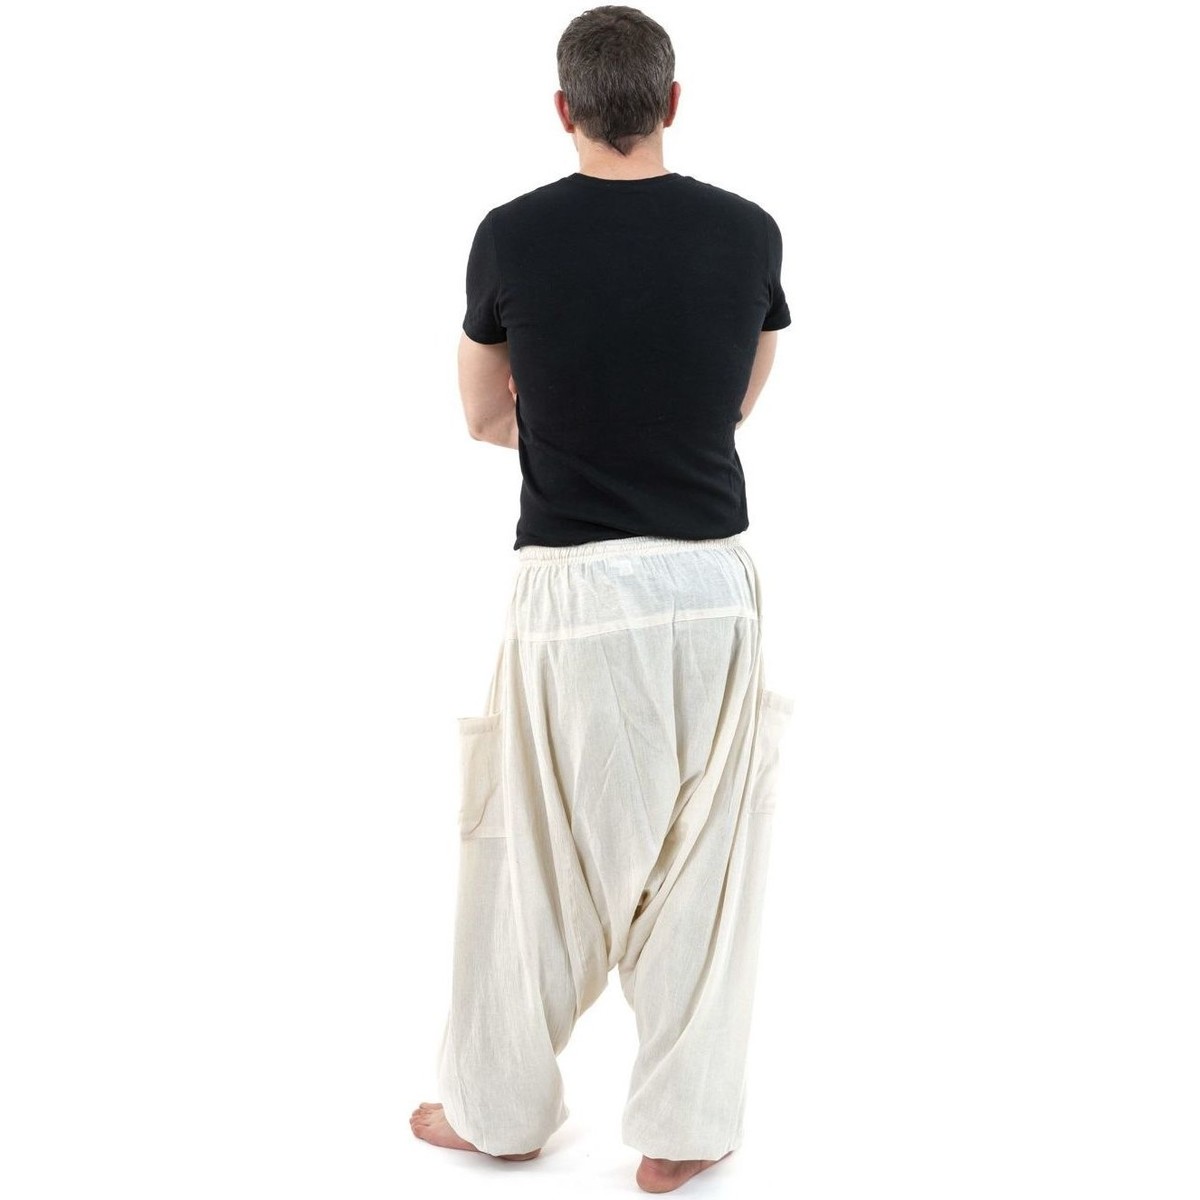 Fantazia Blanc Pantalon sarwel Nepal zen homme femme coton leger creme Tara OVfvcnhw